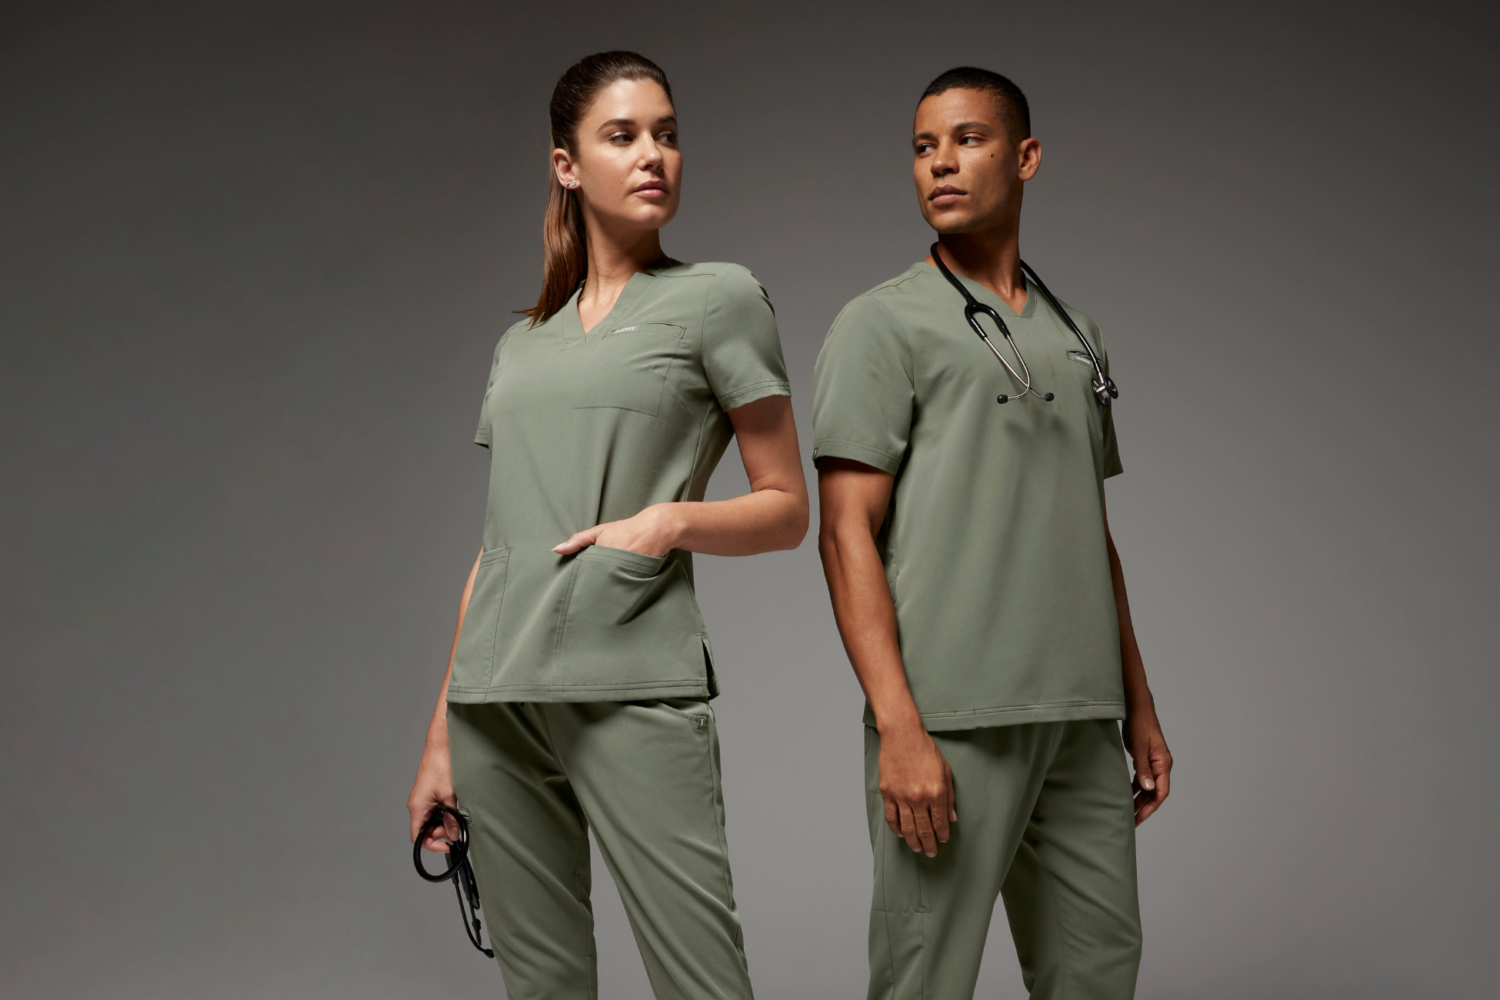 couple-of-nurses-wearing-light-green-uniform